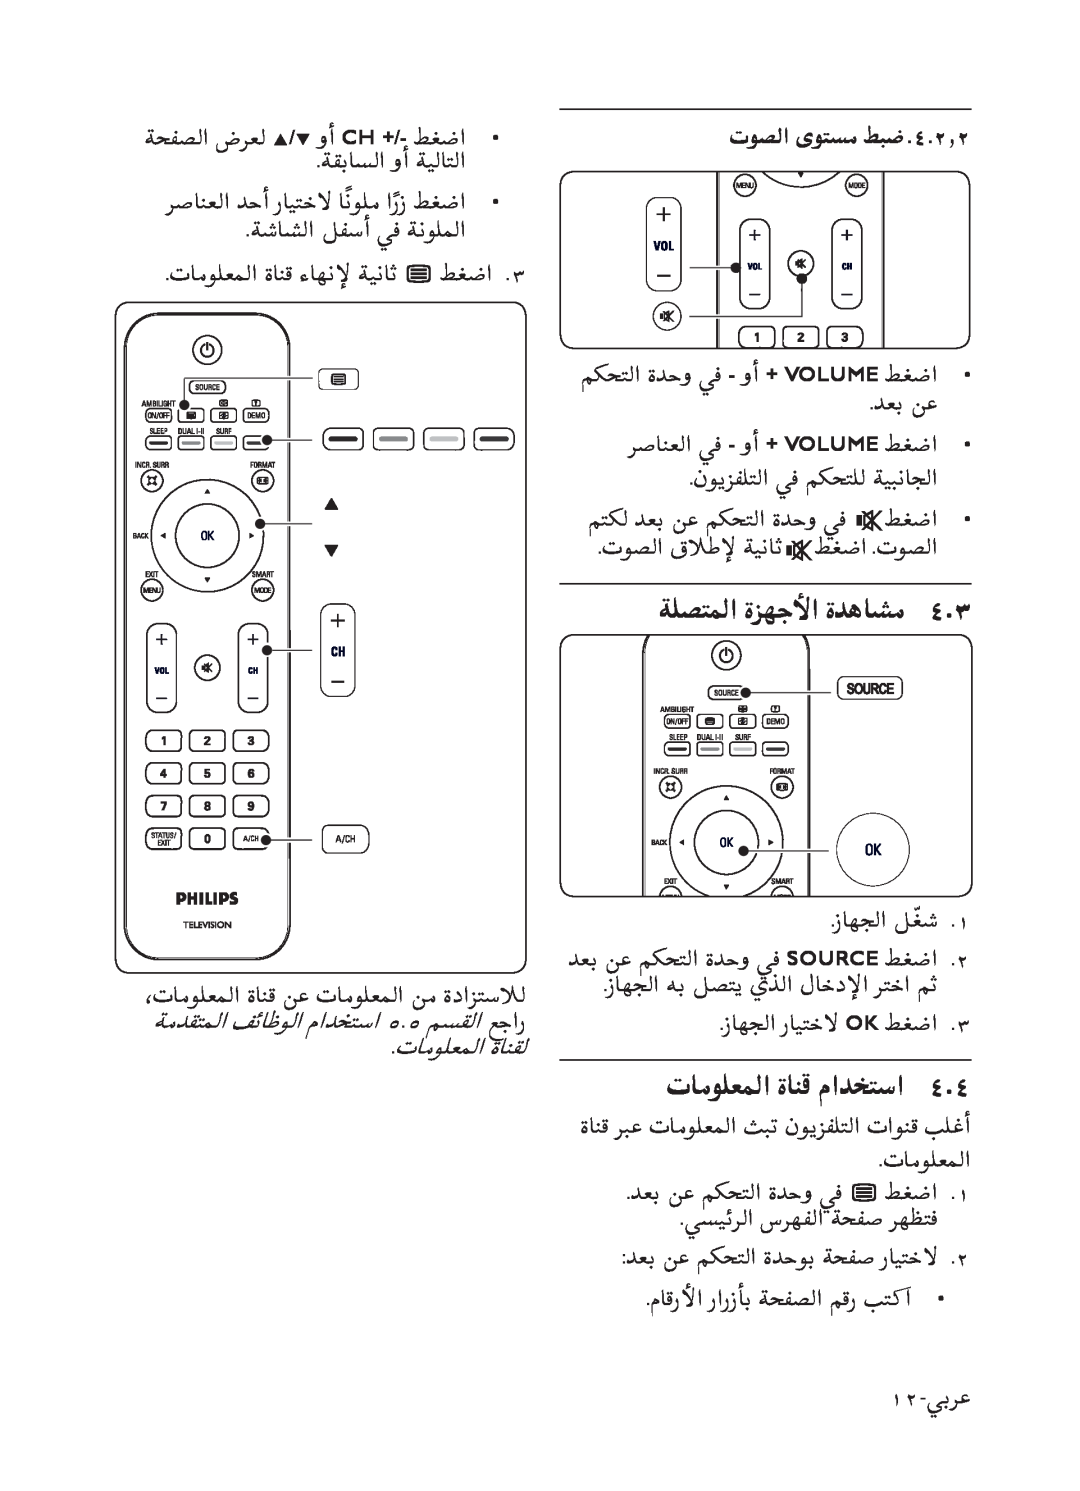 Philips 52PFL7803 user manual ﺔﻠﺼﺘﻤﻟﺍ ﺓﺰﻬﺟﻷﺍ ﺓﺪﻫﺎﺸﻣ, ﺕﺎﻣﻮﻠﻌﻤﻟﺍ ﺓﺎﻨﻗ ﻡﺍﺪﺨﺘﺳﺍ, ﺕﻮﺼﻟﺍ ﻯﻮﺘﺴﻣ ﻂﺒﺿ.٤.٢٫٢, ﺕﺎﻣﻮﻠﻌﻤﻟﺍ ﺓﺎﻨﻘﻟ 